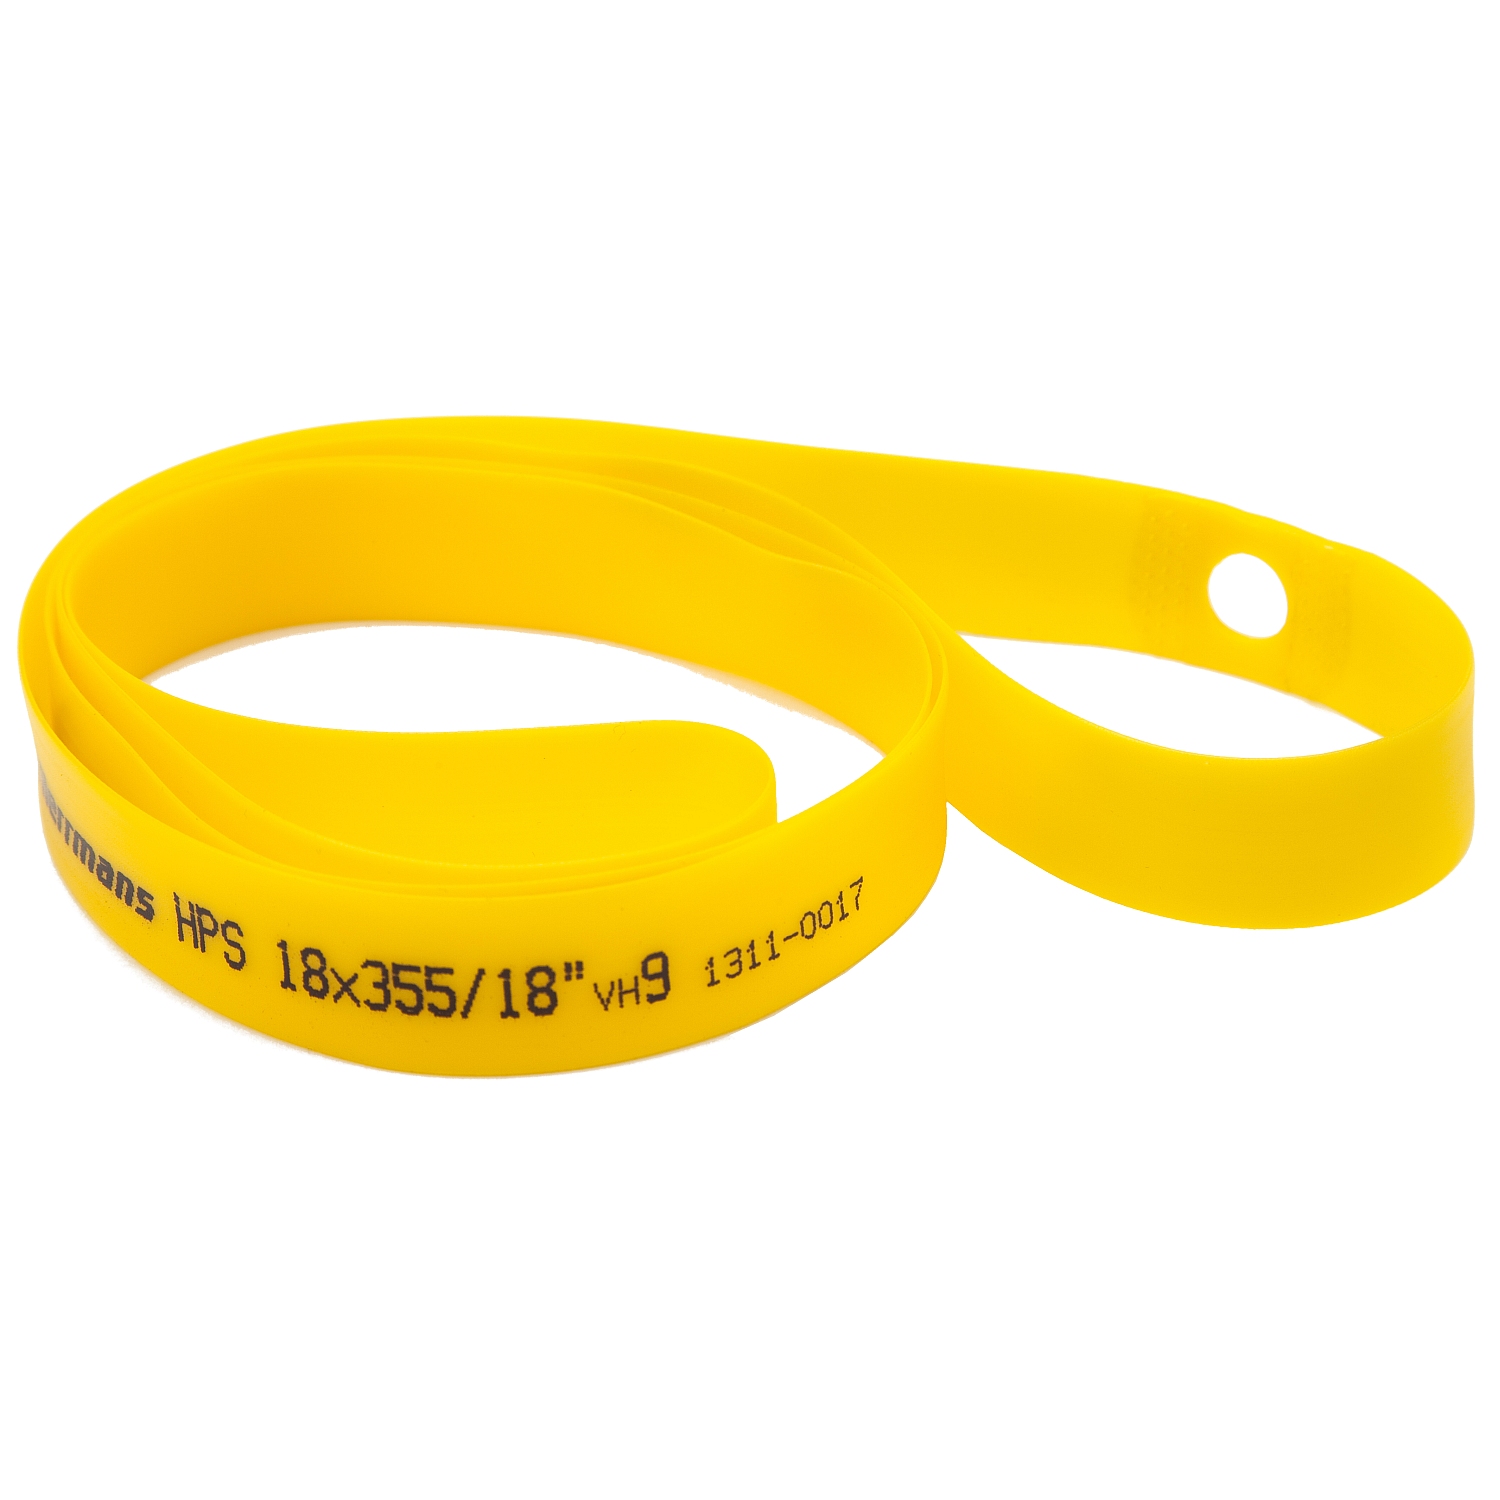 Picture of Brompton Universal Rim Tape - yellow